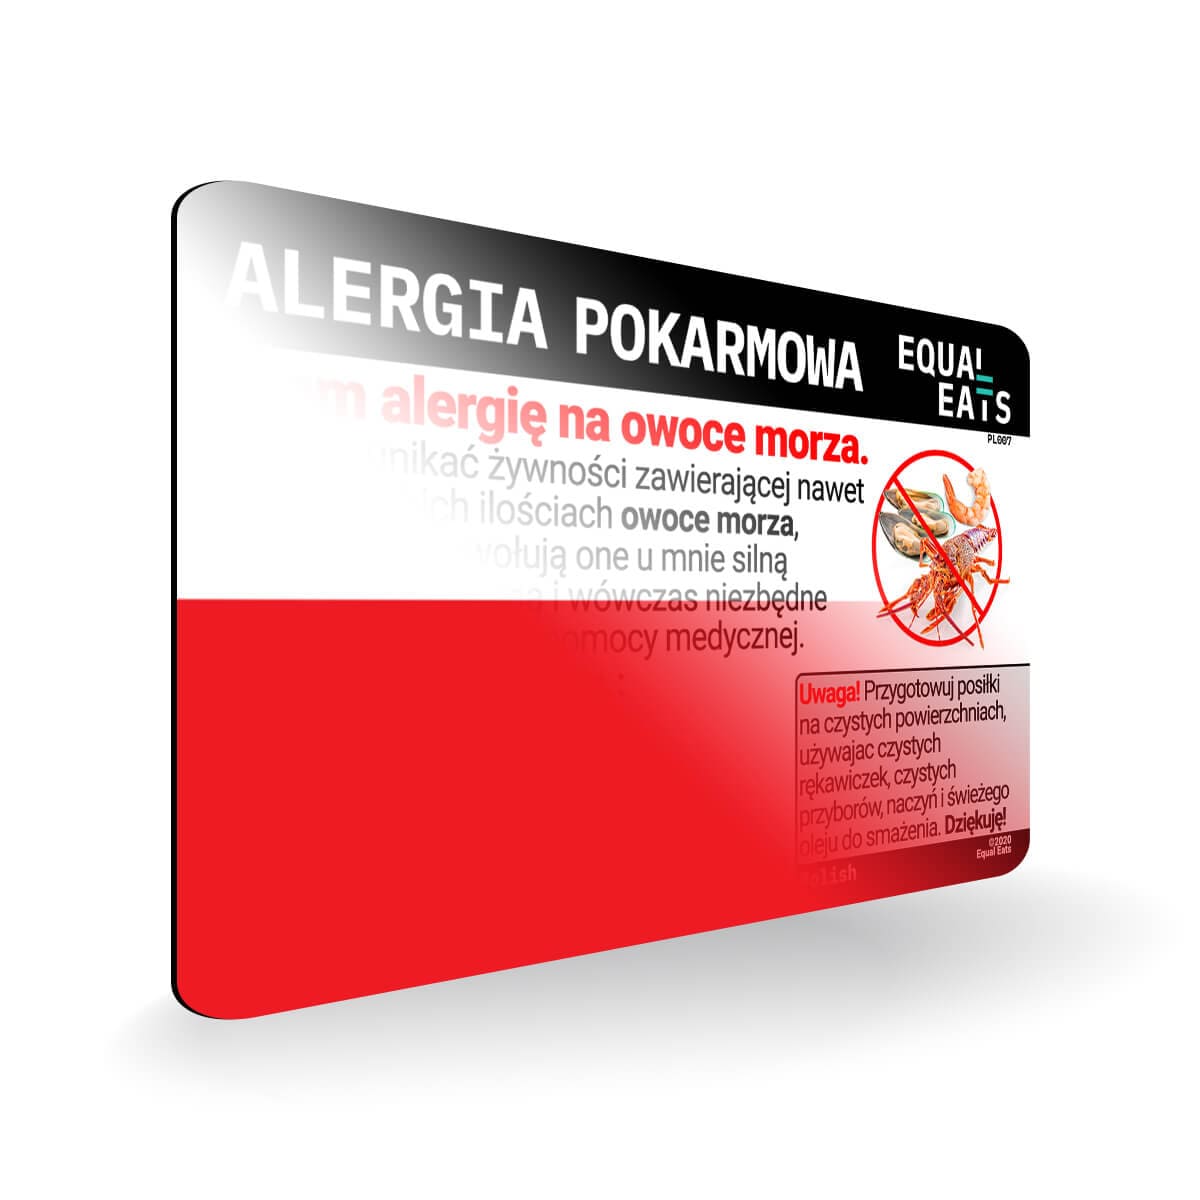 Shellfish Allergy in Polish. Shellfish Allergy Card for Poland